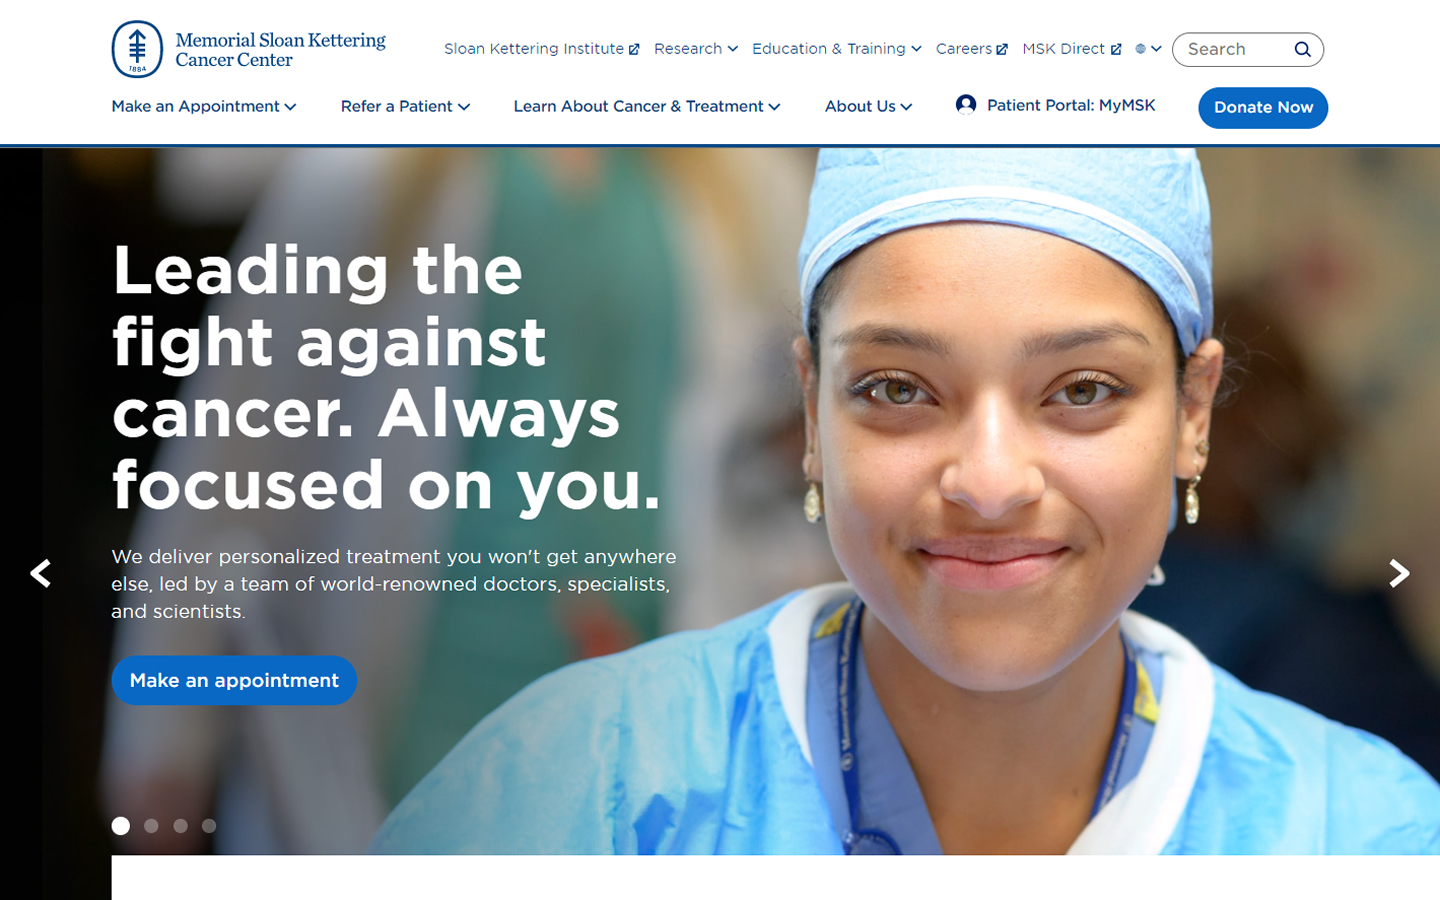 Memorial Sloan Kettering Cancer Center website